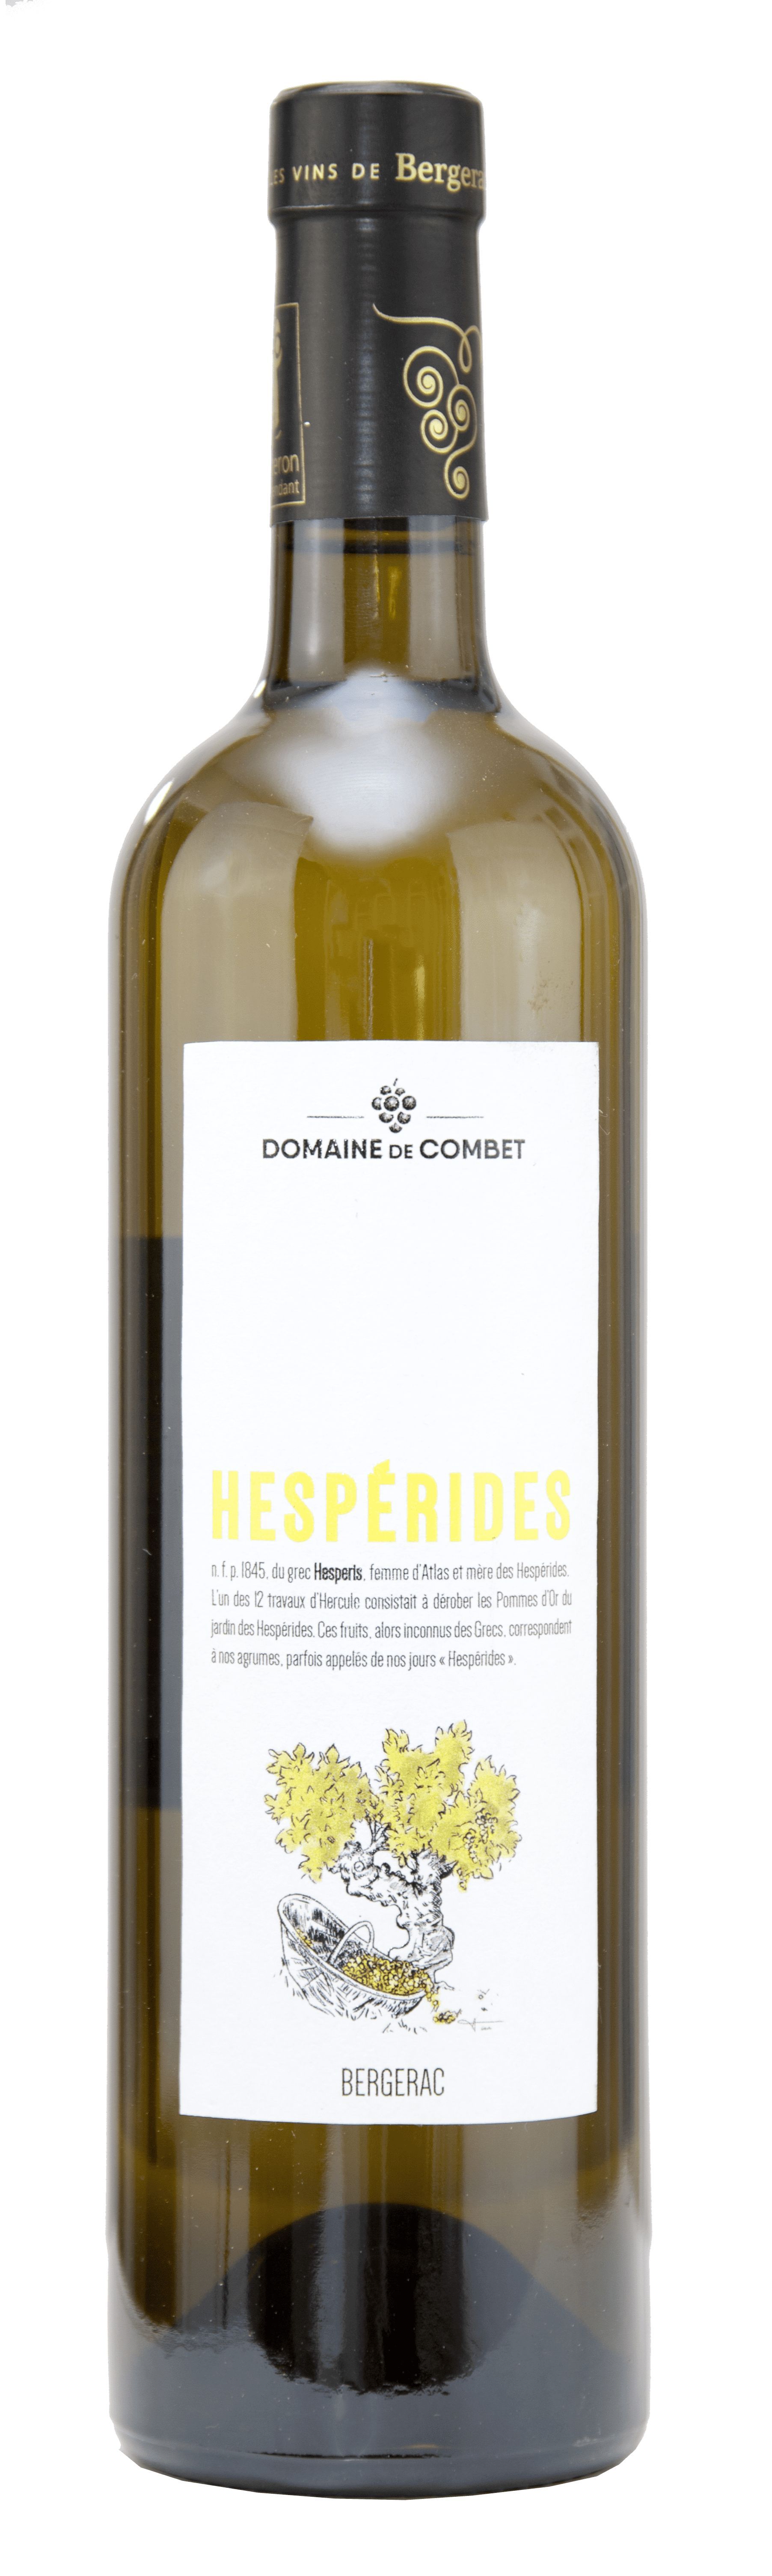 Earl de Combet HESPERIDES, White, 2021, Bergerac. Bottle image